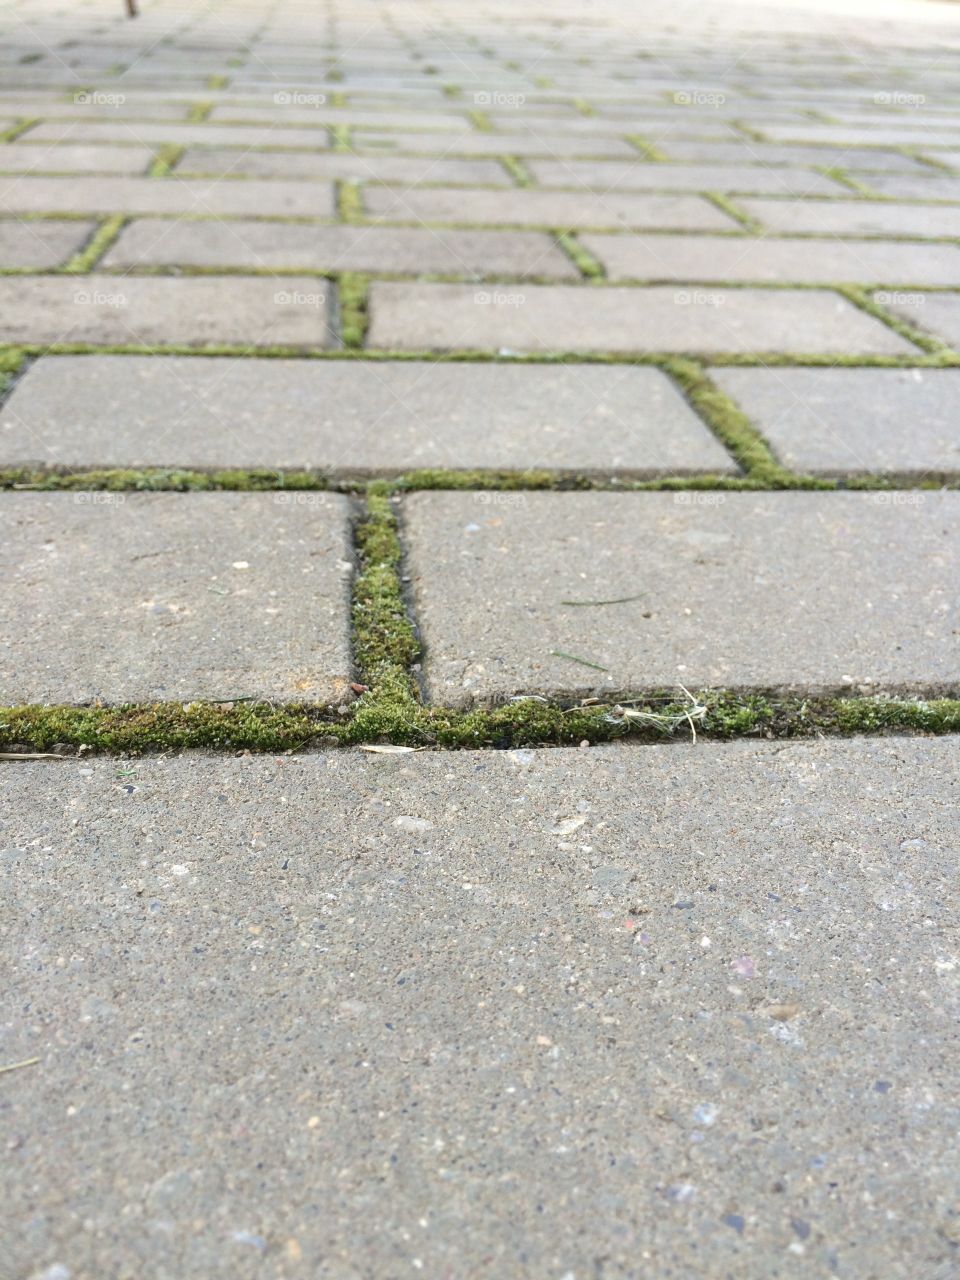 Pavement. City around and pavement underfoot